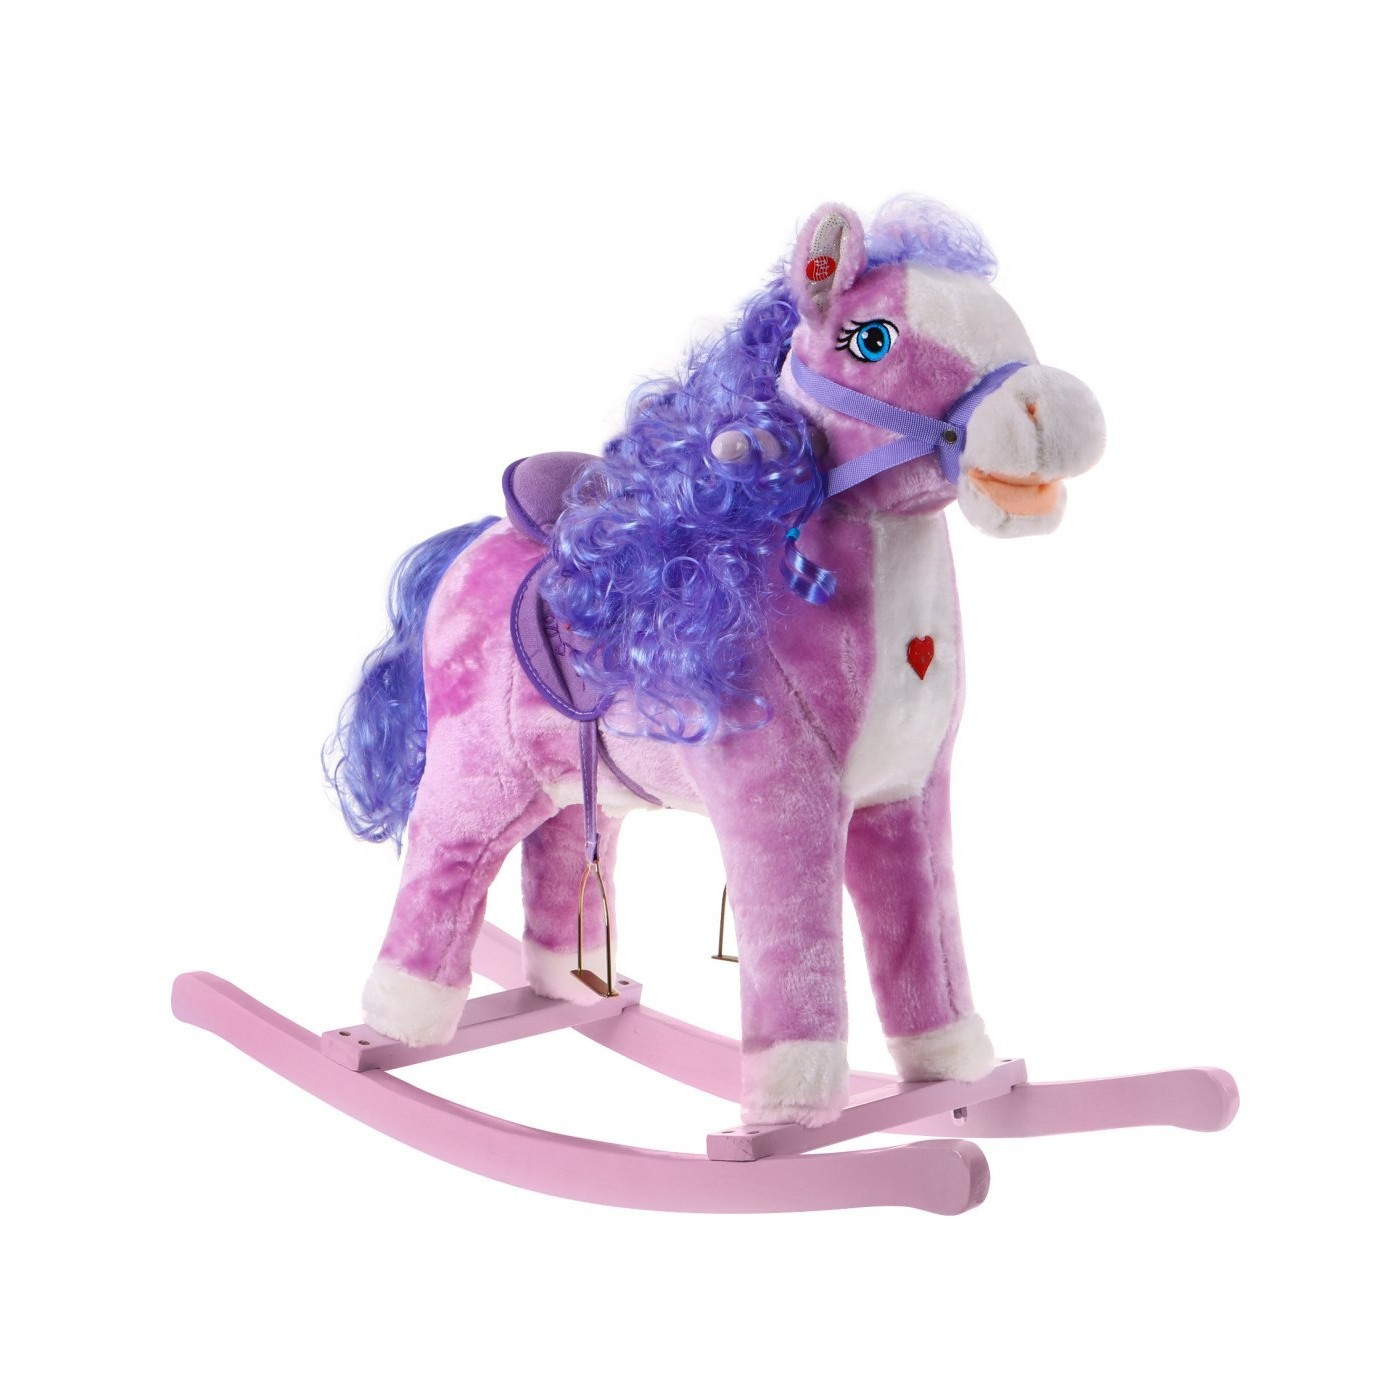 Pony Rocking Horse Purple